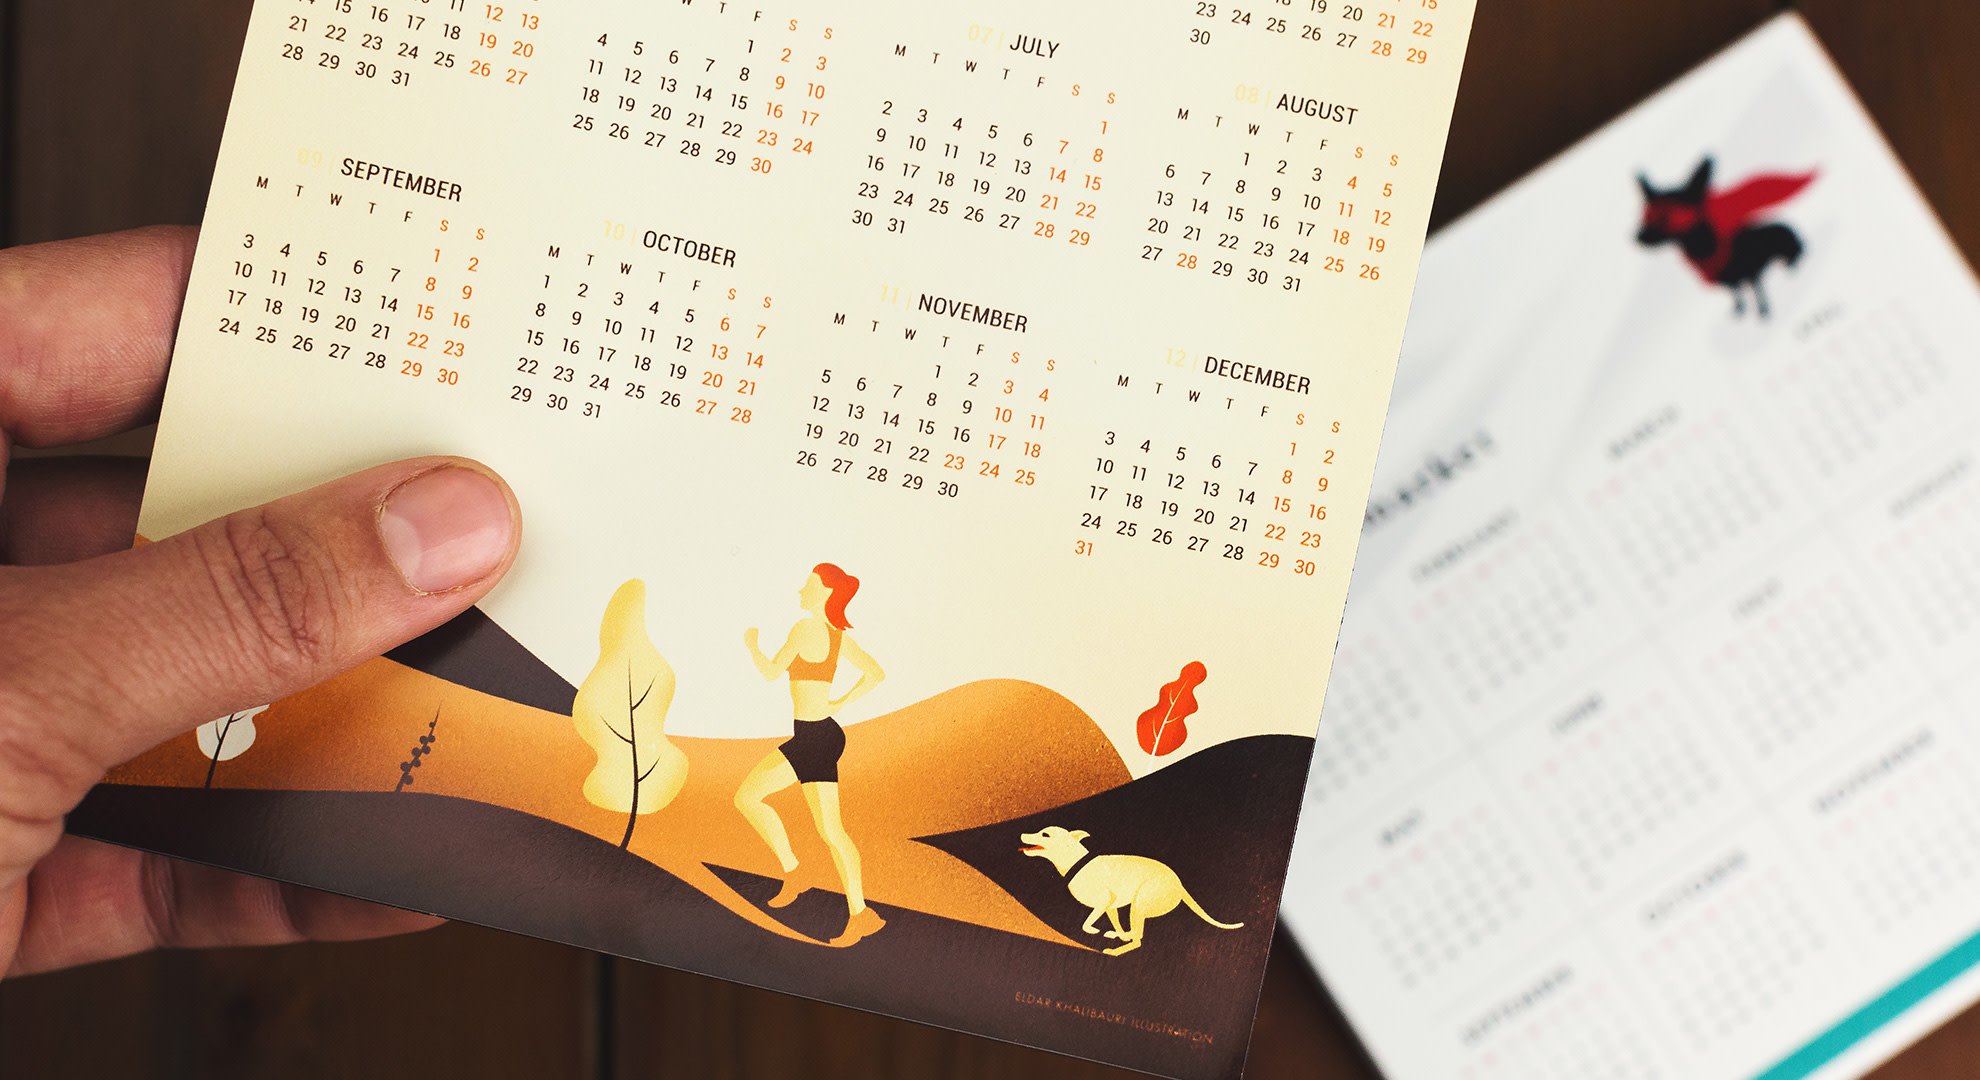 a custom magnet calendar with the full year